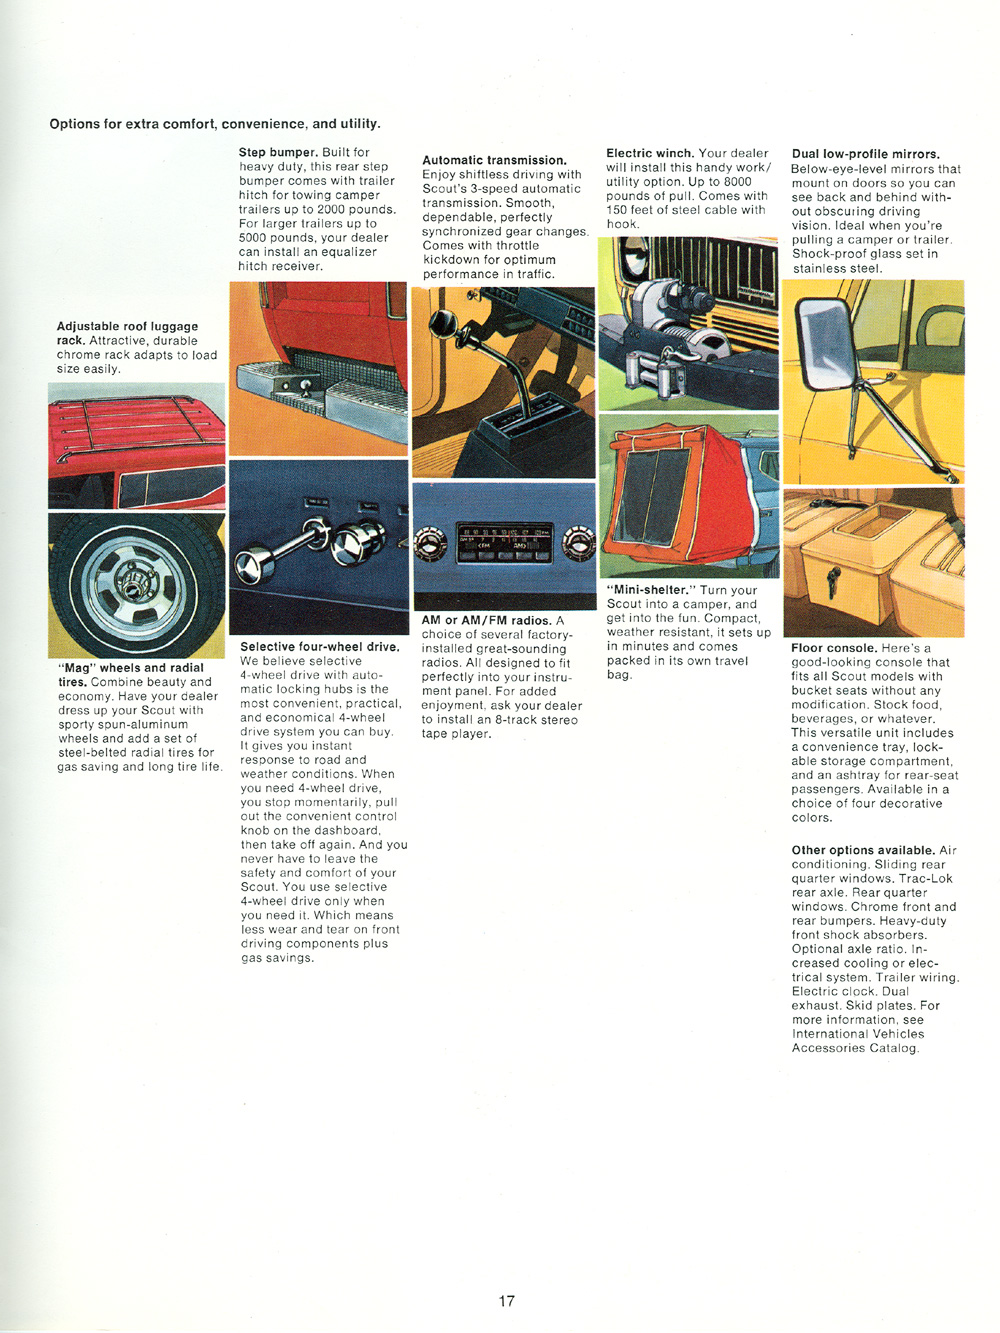 1975 International Recreational Vehicles Brochure Page 14